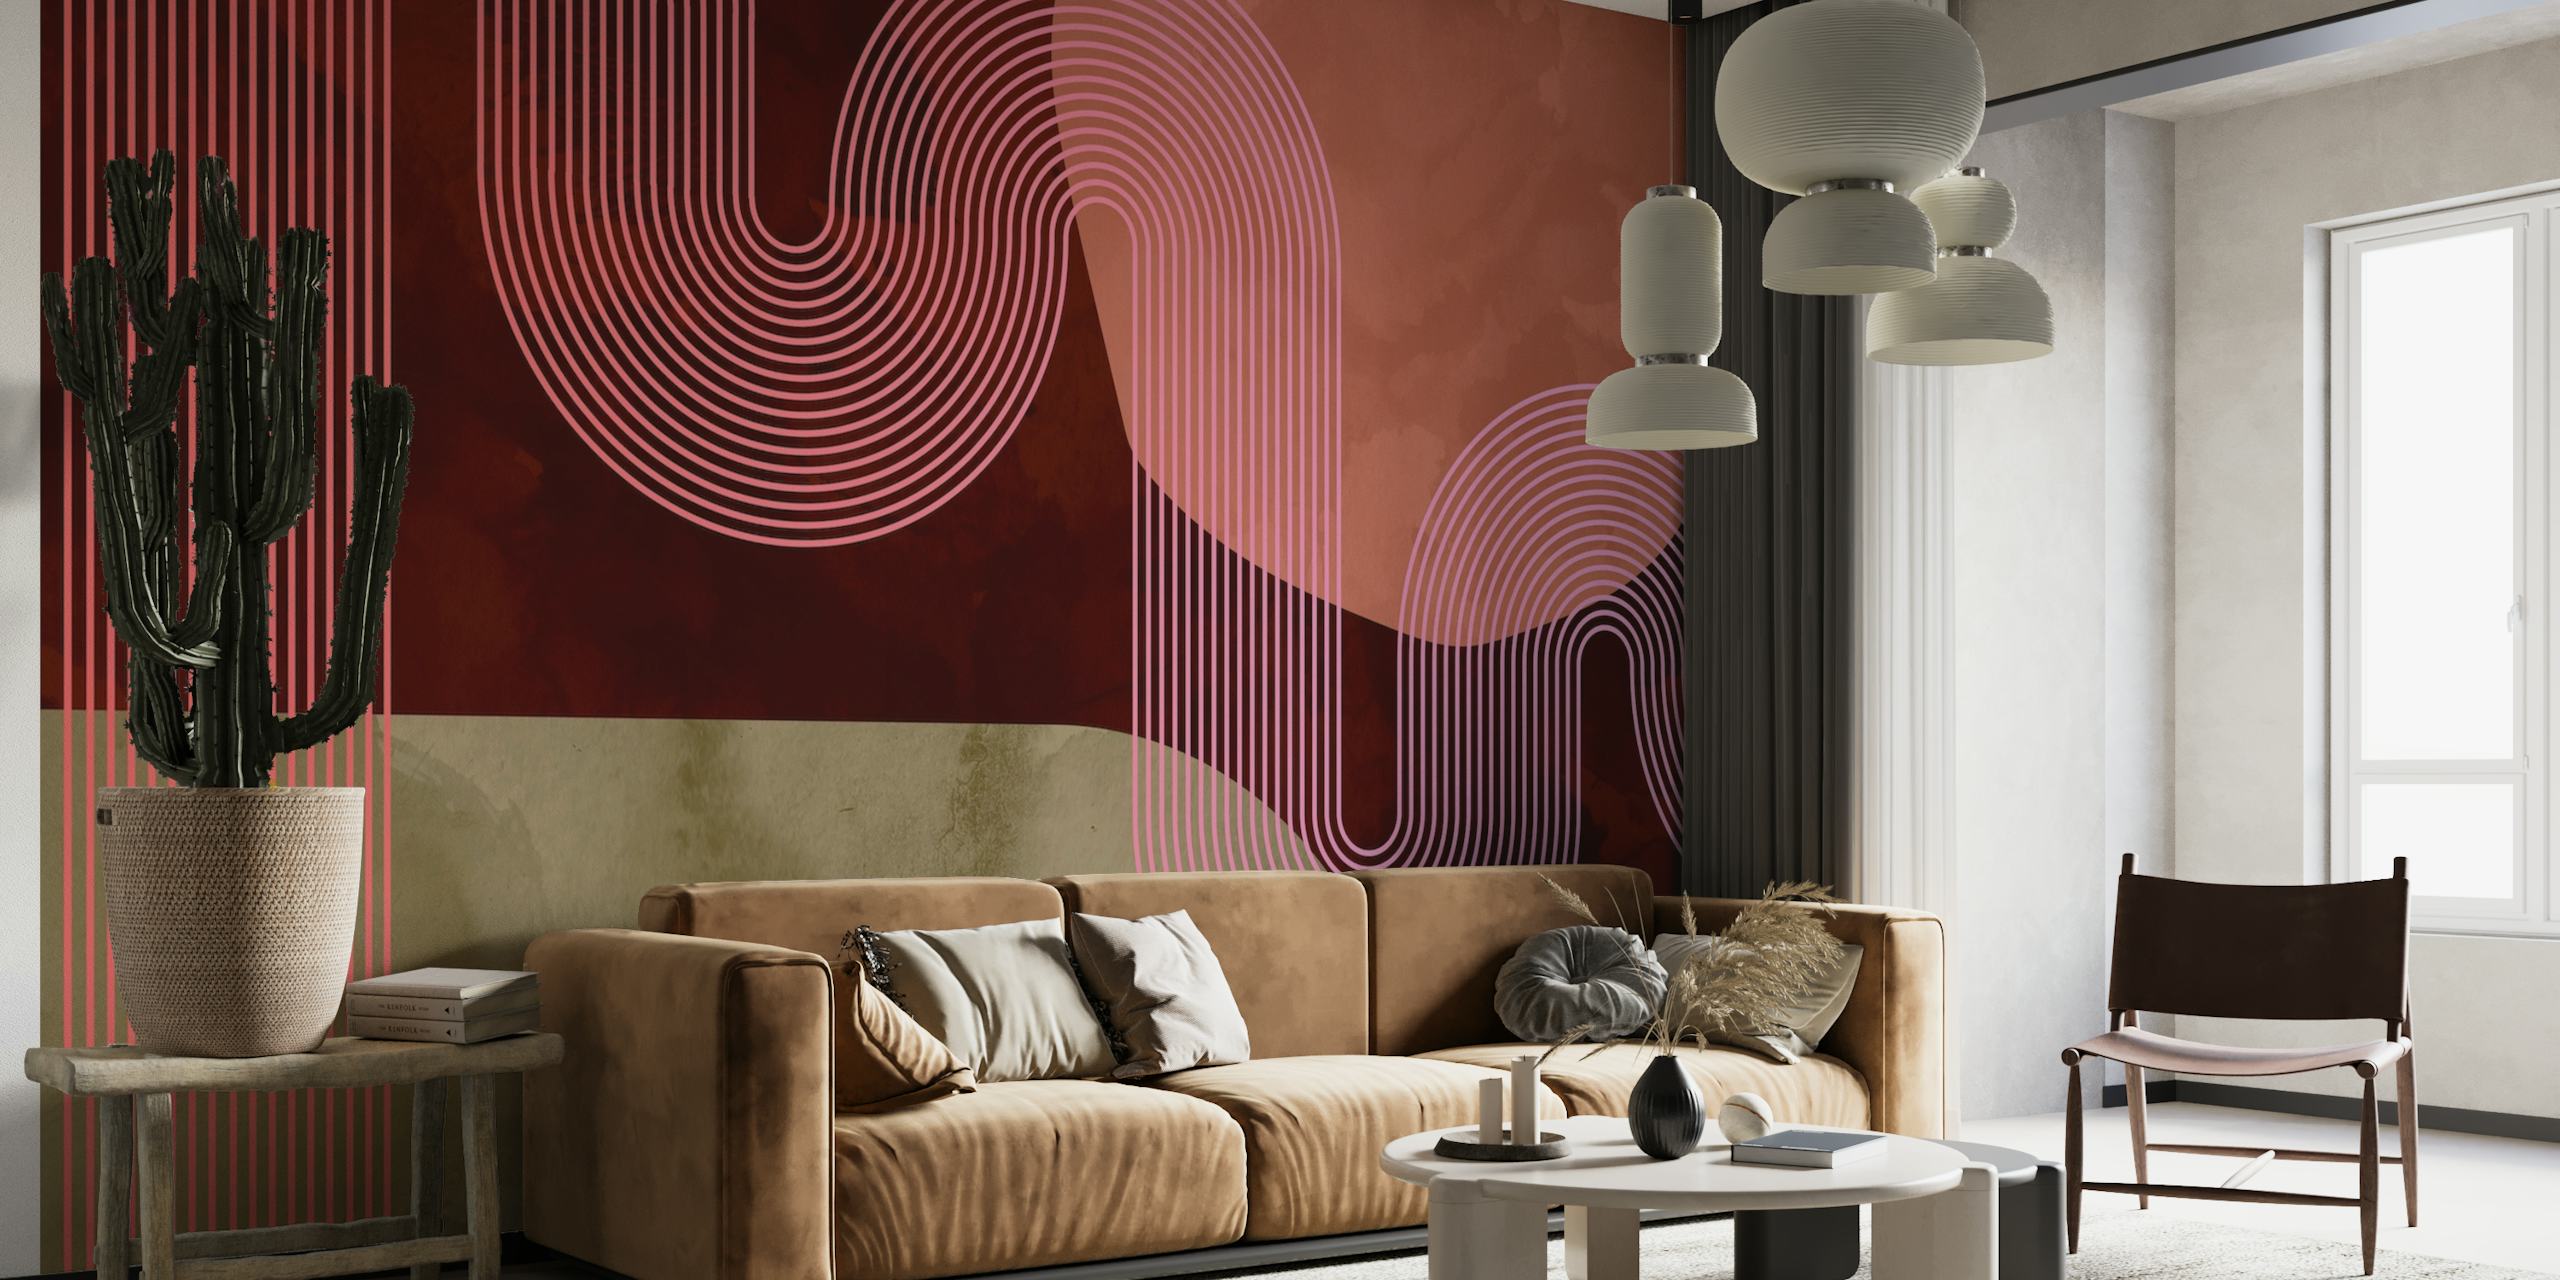 Unique Mid Century Modern Curvy Lines wallpaper